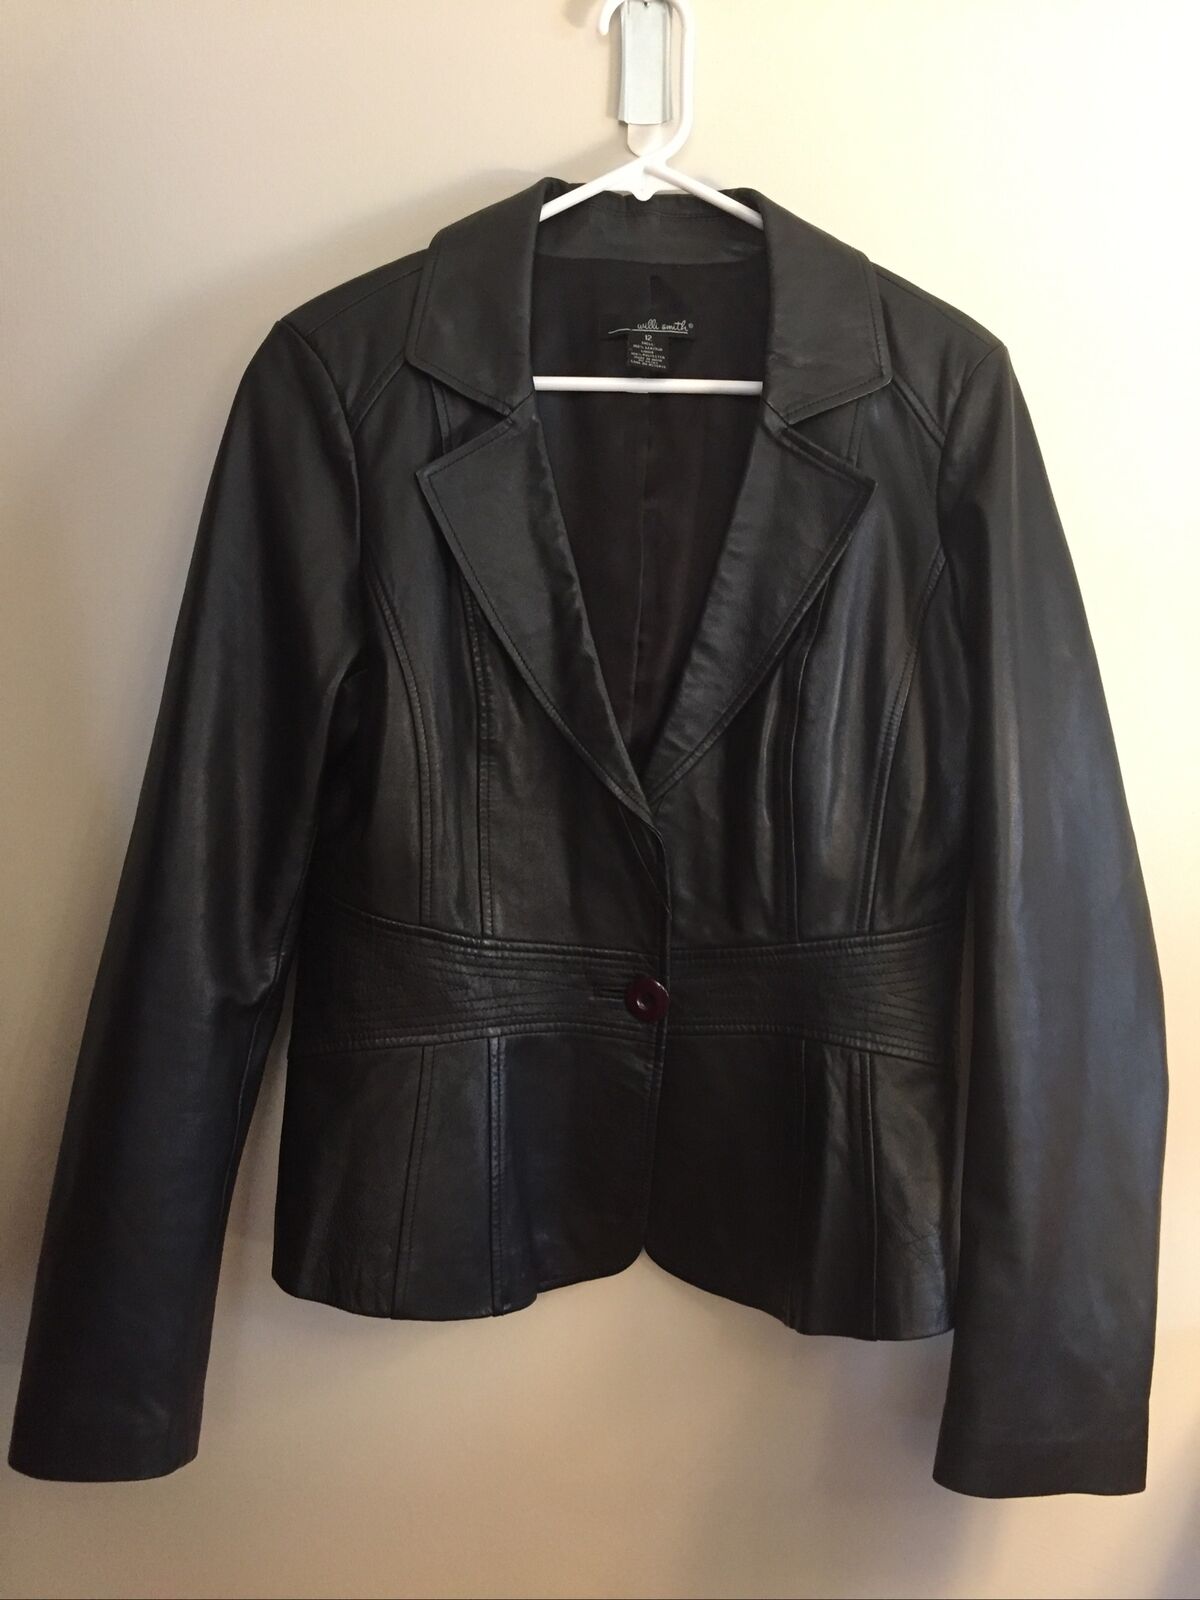 Willi Smith Black Leather Jacket Tapered Waist Size 12